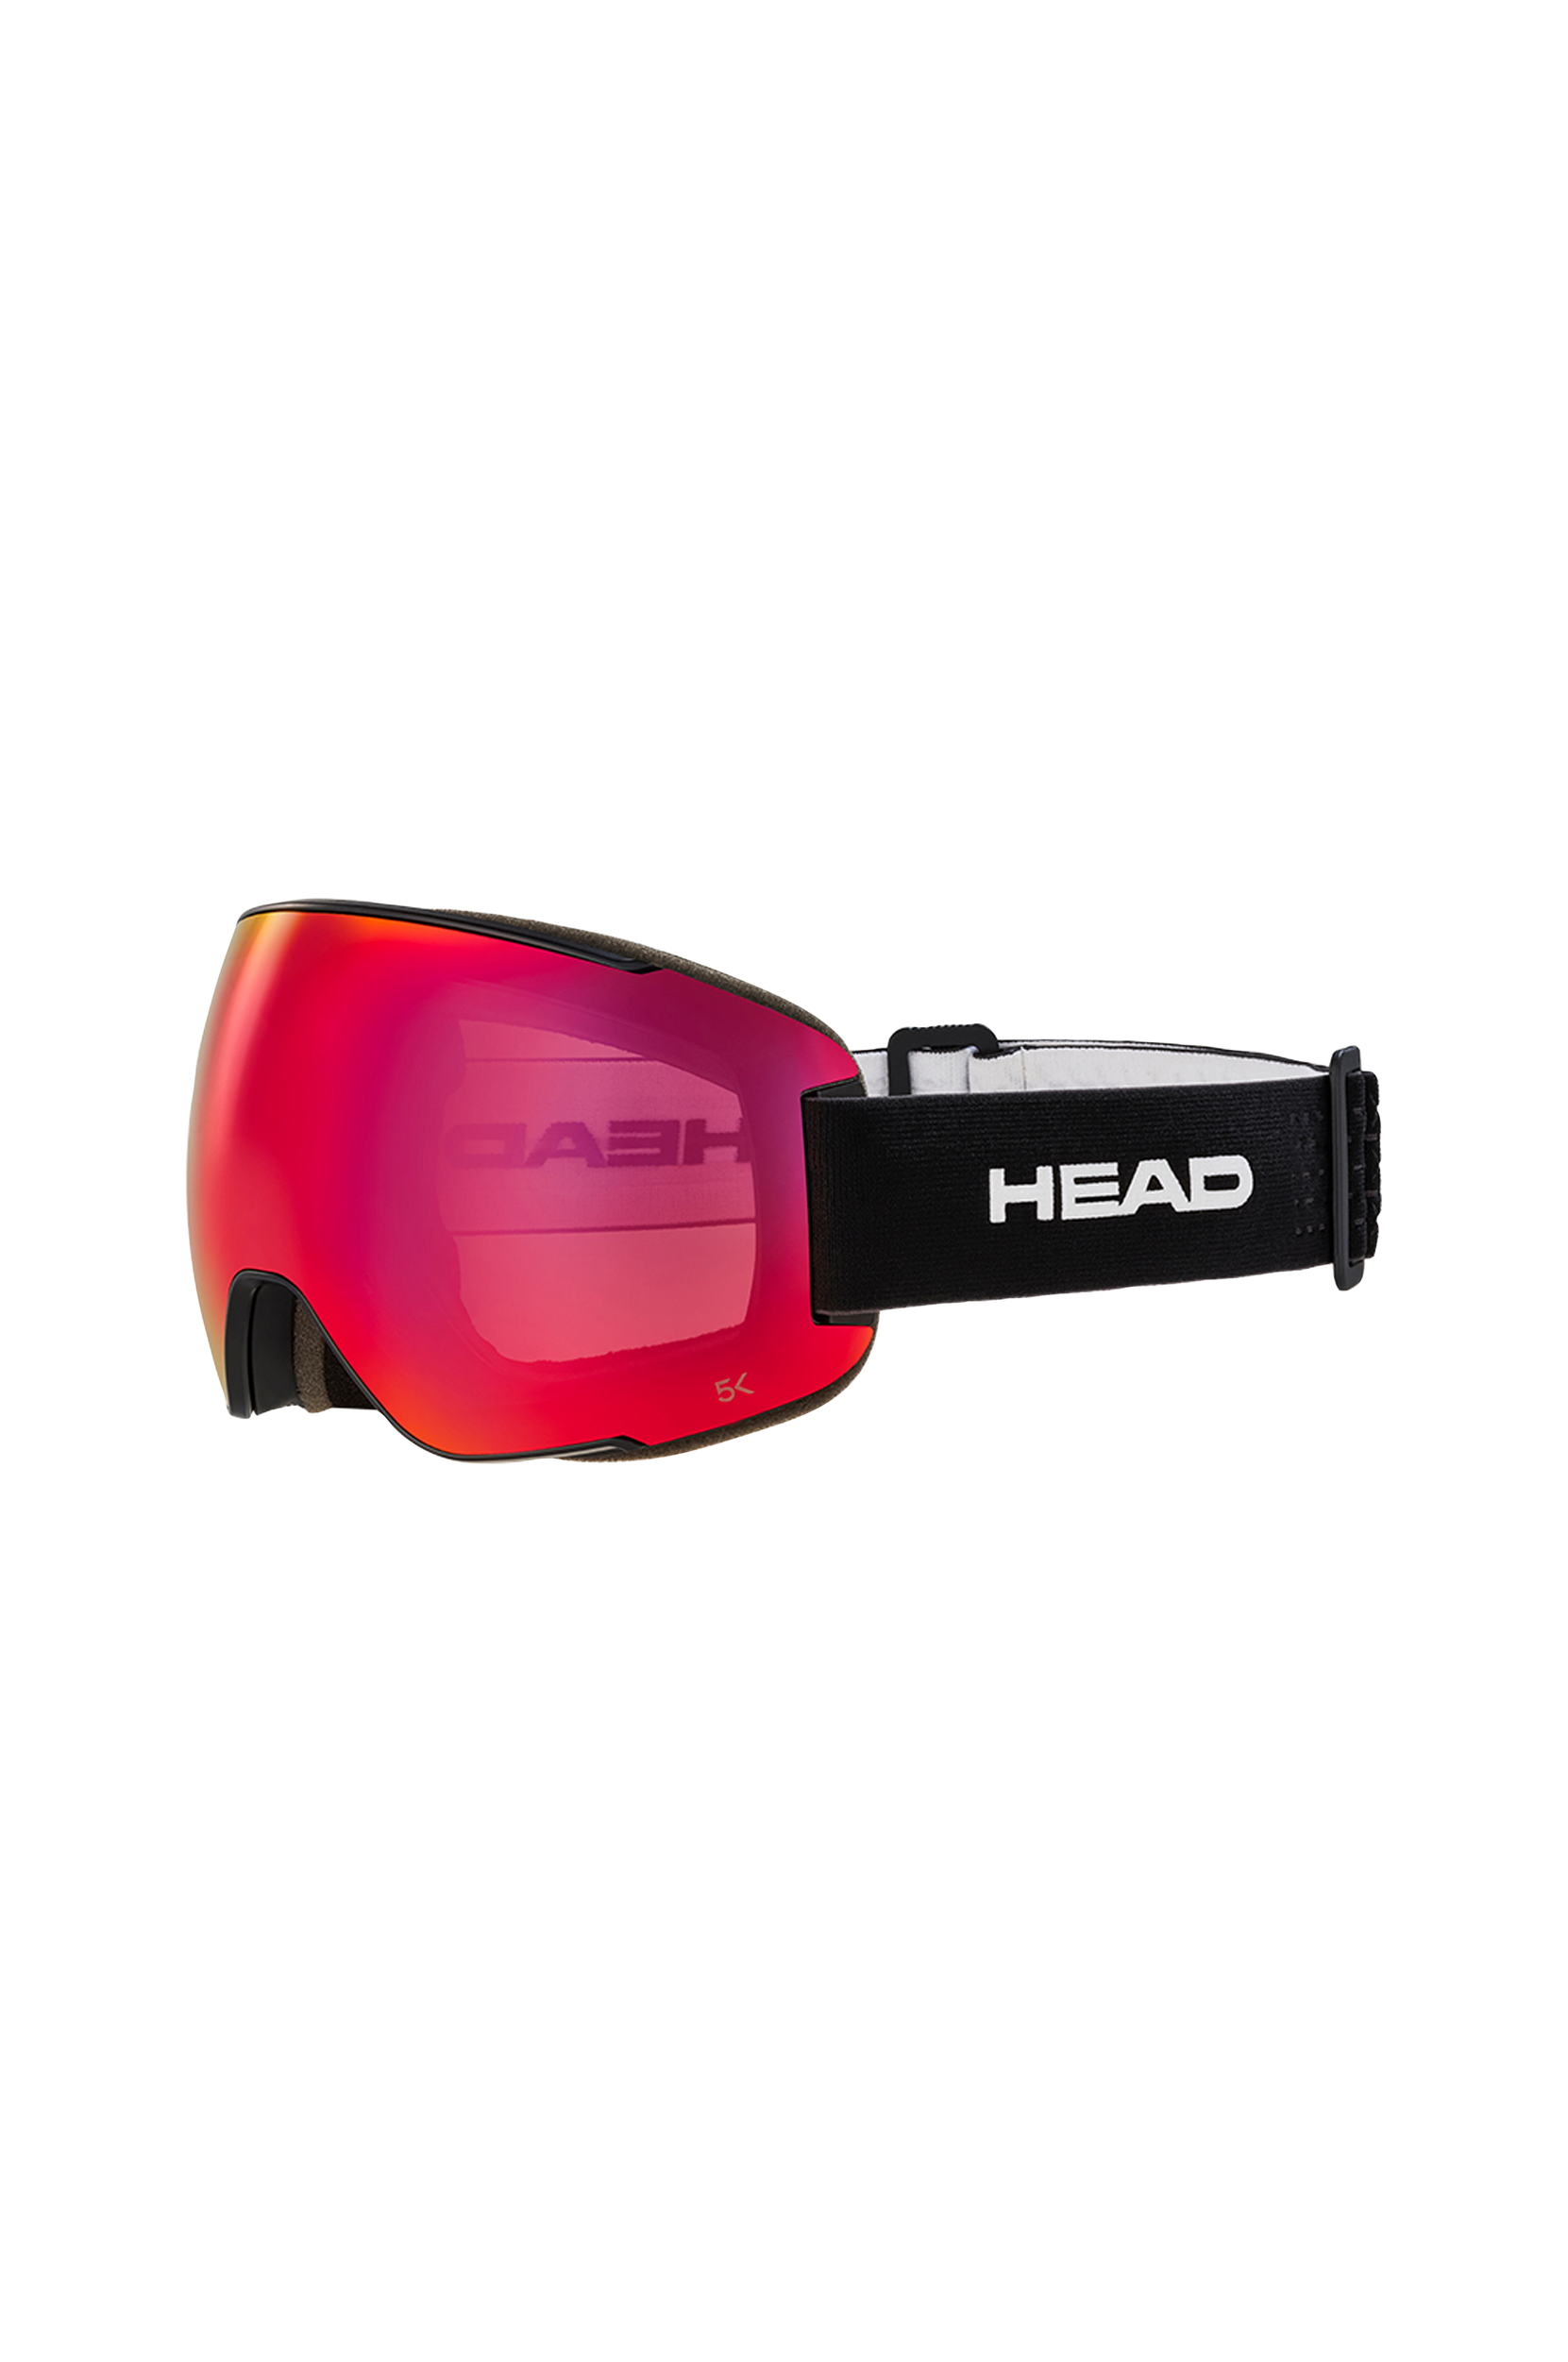 Head - Skidglasögon / goggles Magnify 5K Senior - Svart